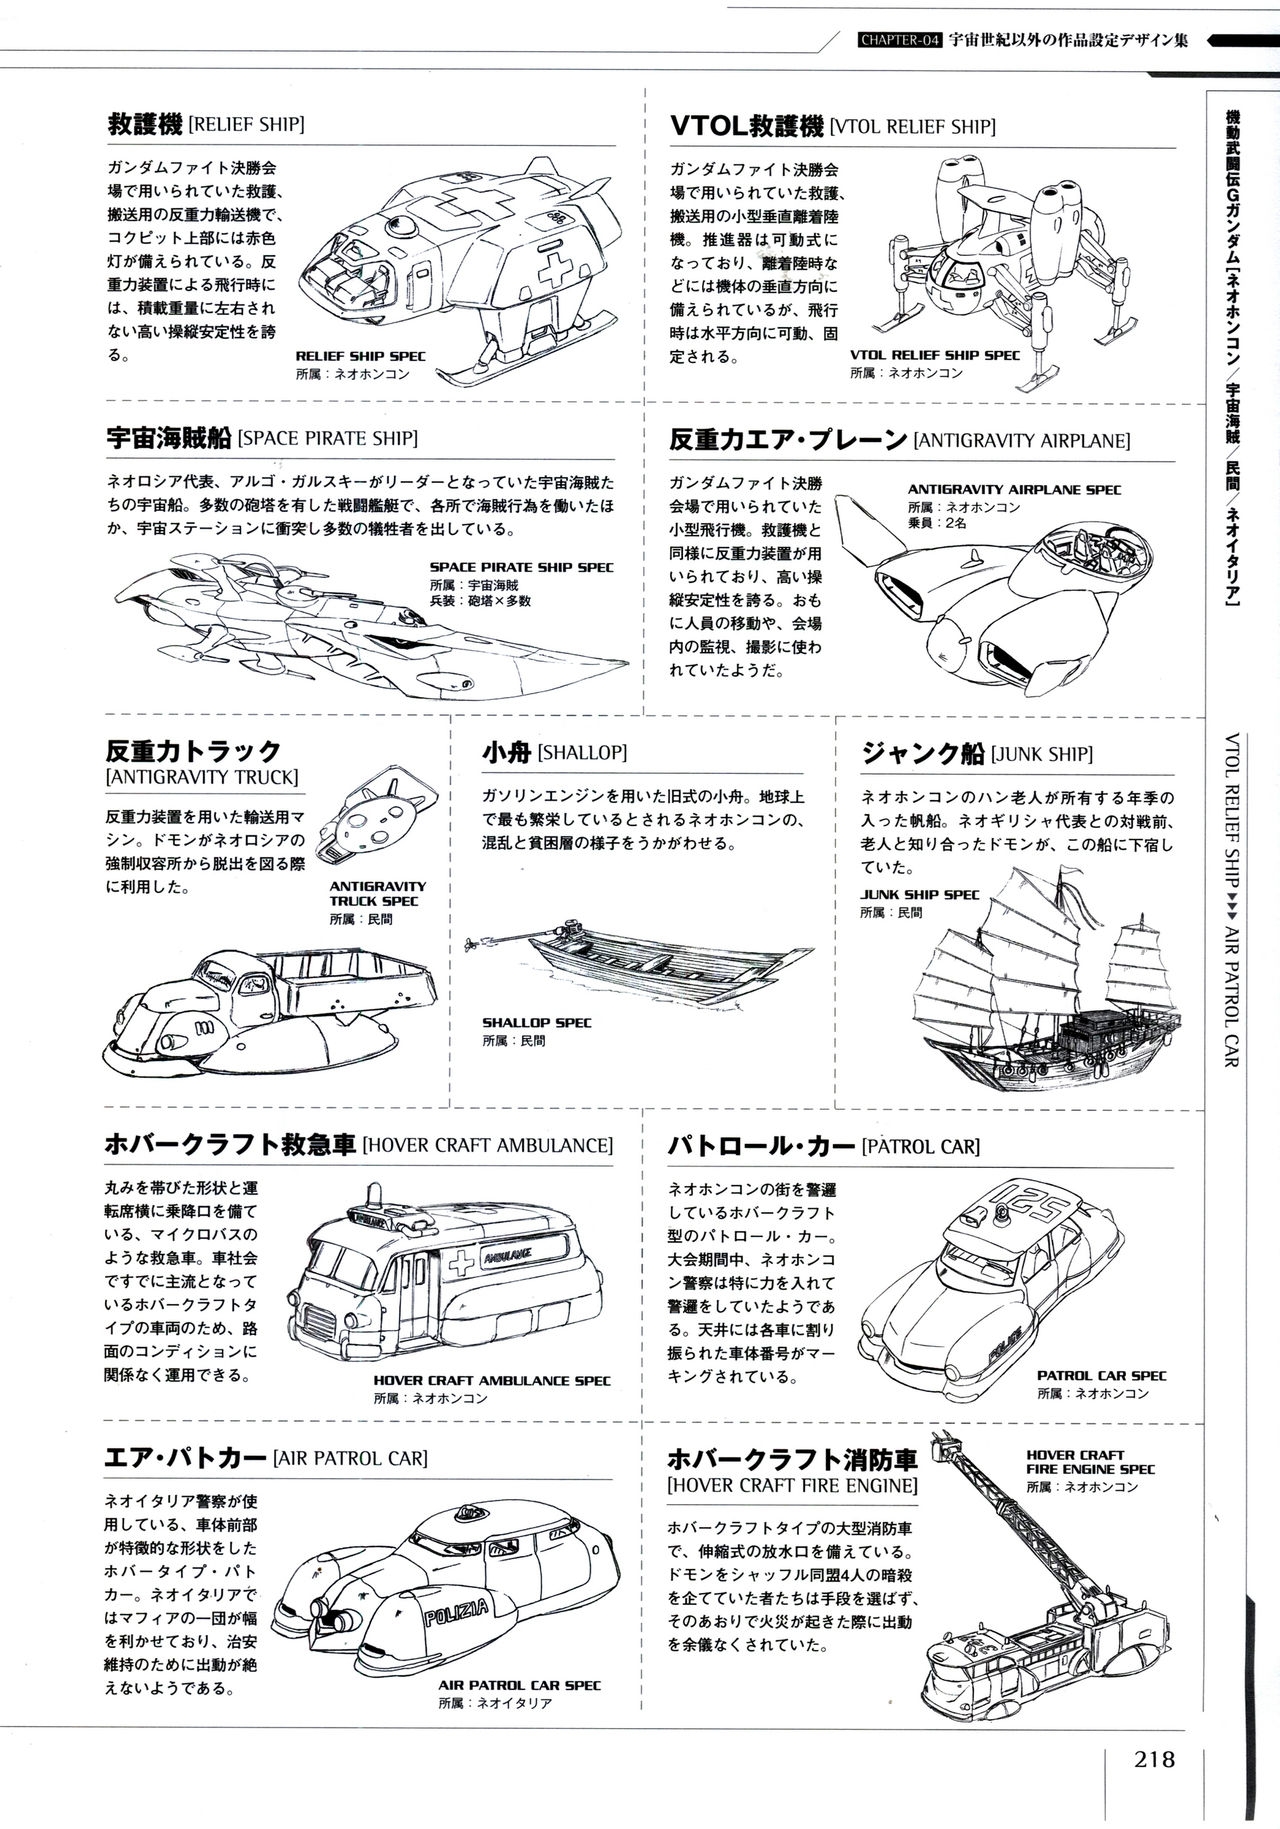 Mobile Suit Gundam - Ship & Aerospace Plane Encyclopedia - Revised Edition 223